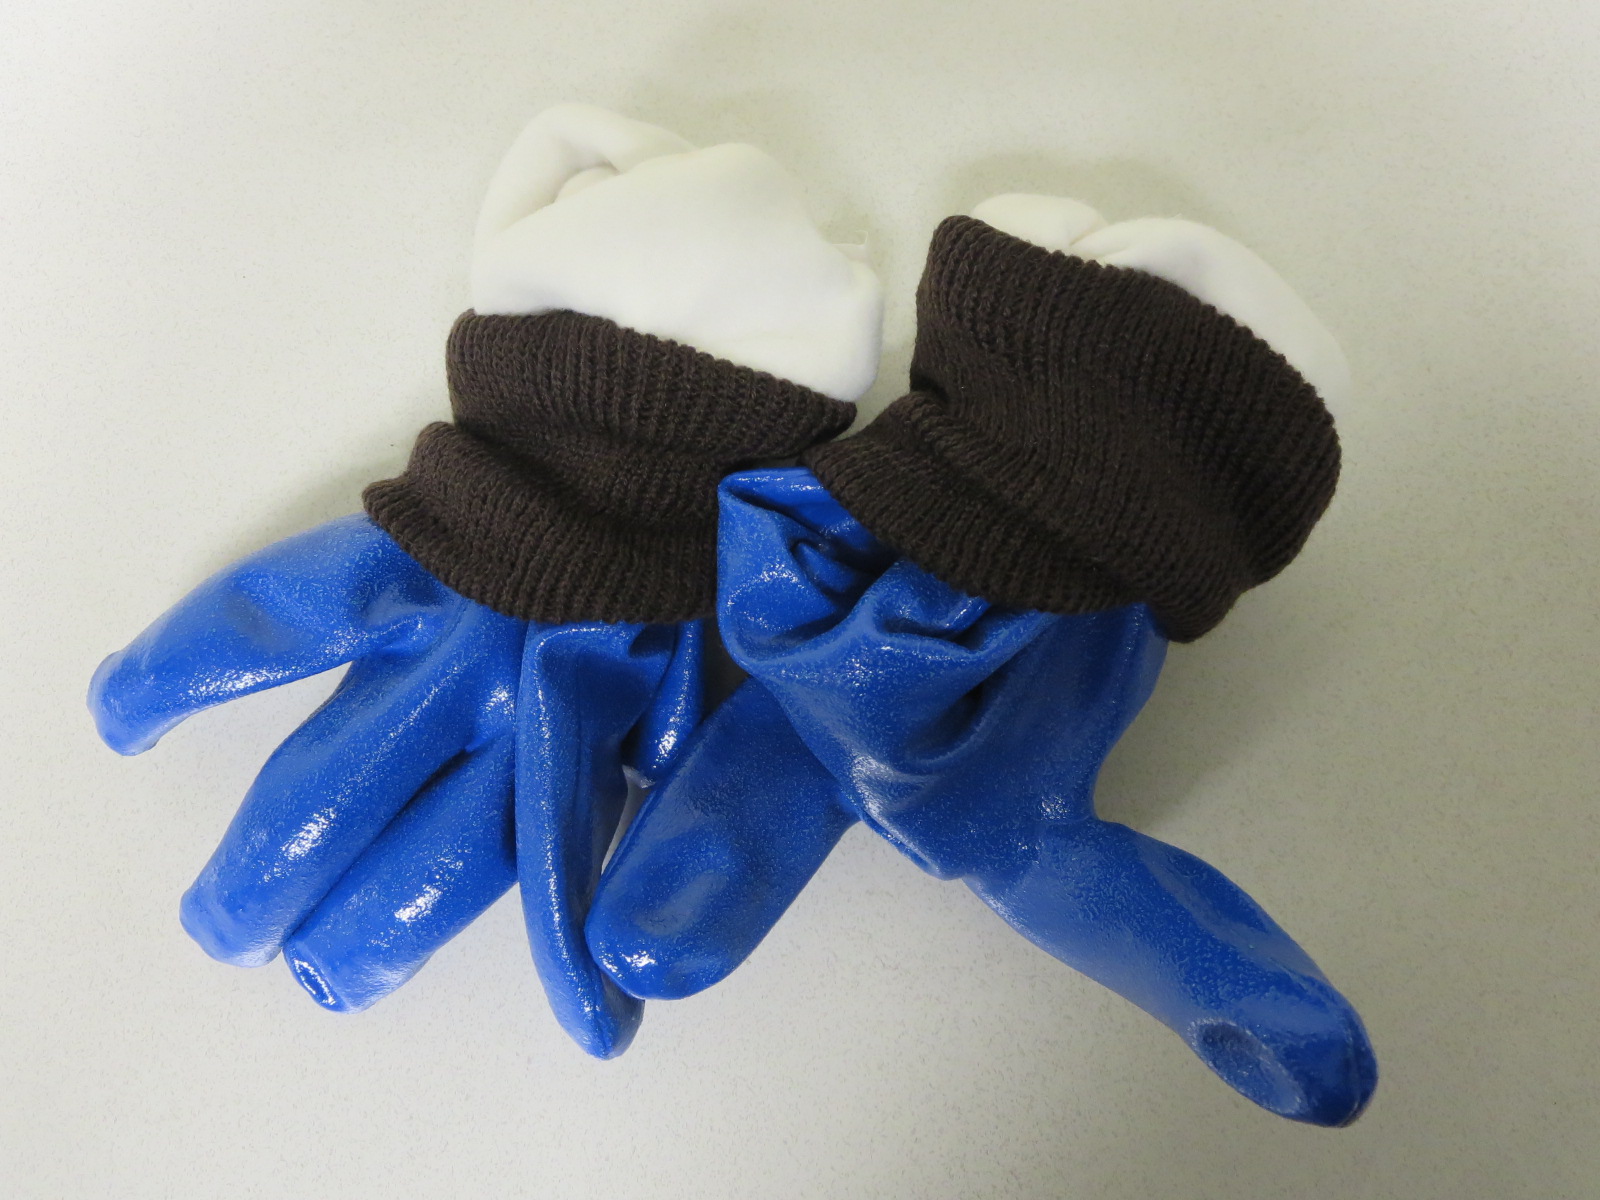 North Sea™ Nitrile Coated Fleece Lined Winter Work Gloves w/ Knit Cuffs, Waterproof Marine Work Gloves